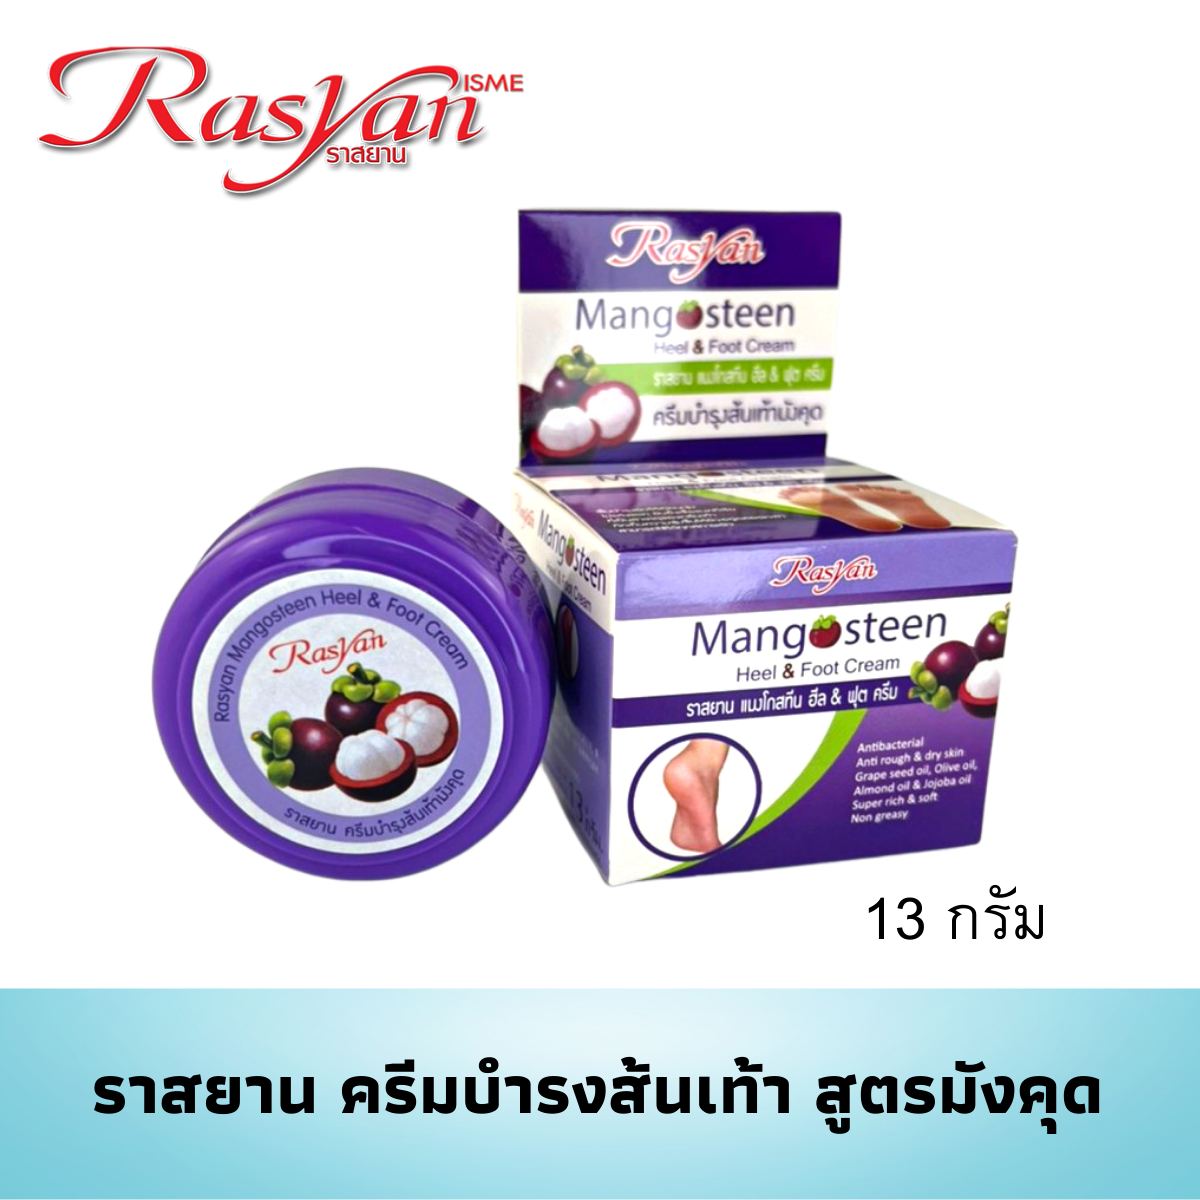 Rasyan Mangosteen Hell & Foot Cream (13 g) Beautiful